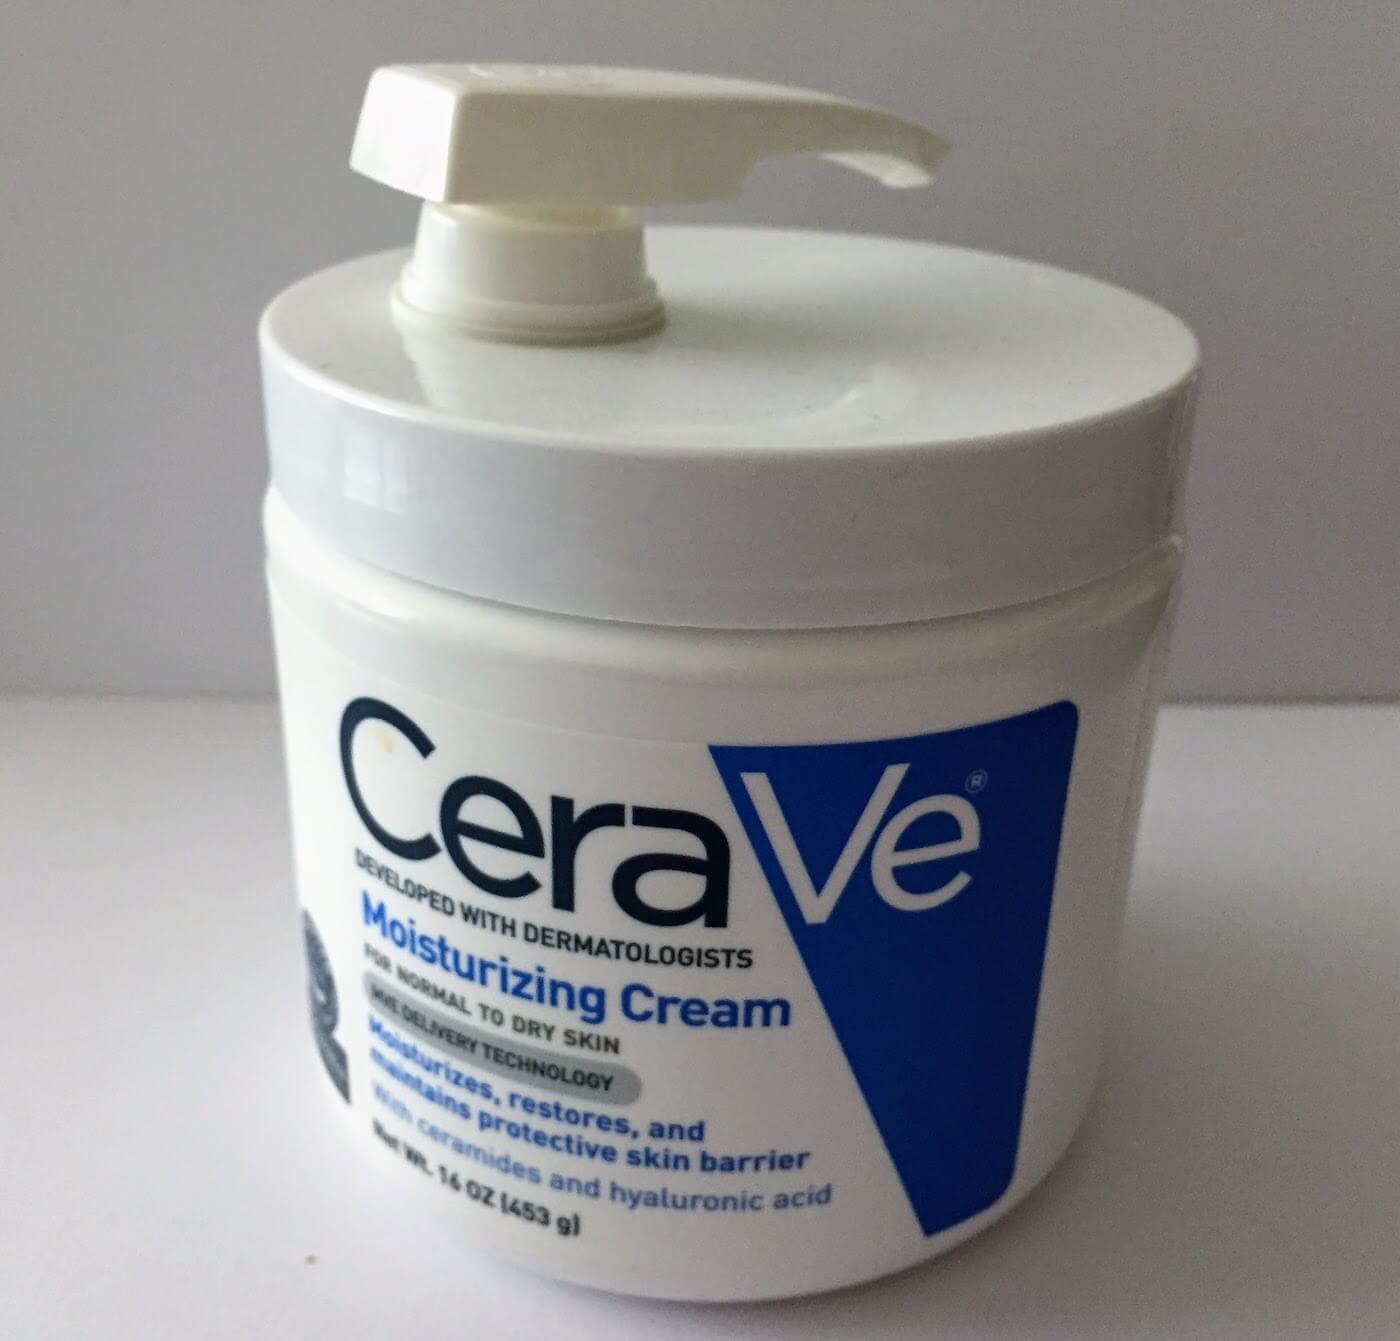 cerave moisturizing cream vs cetaphil moisturizing cream review